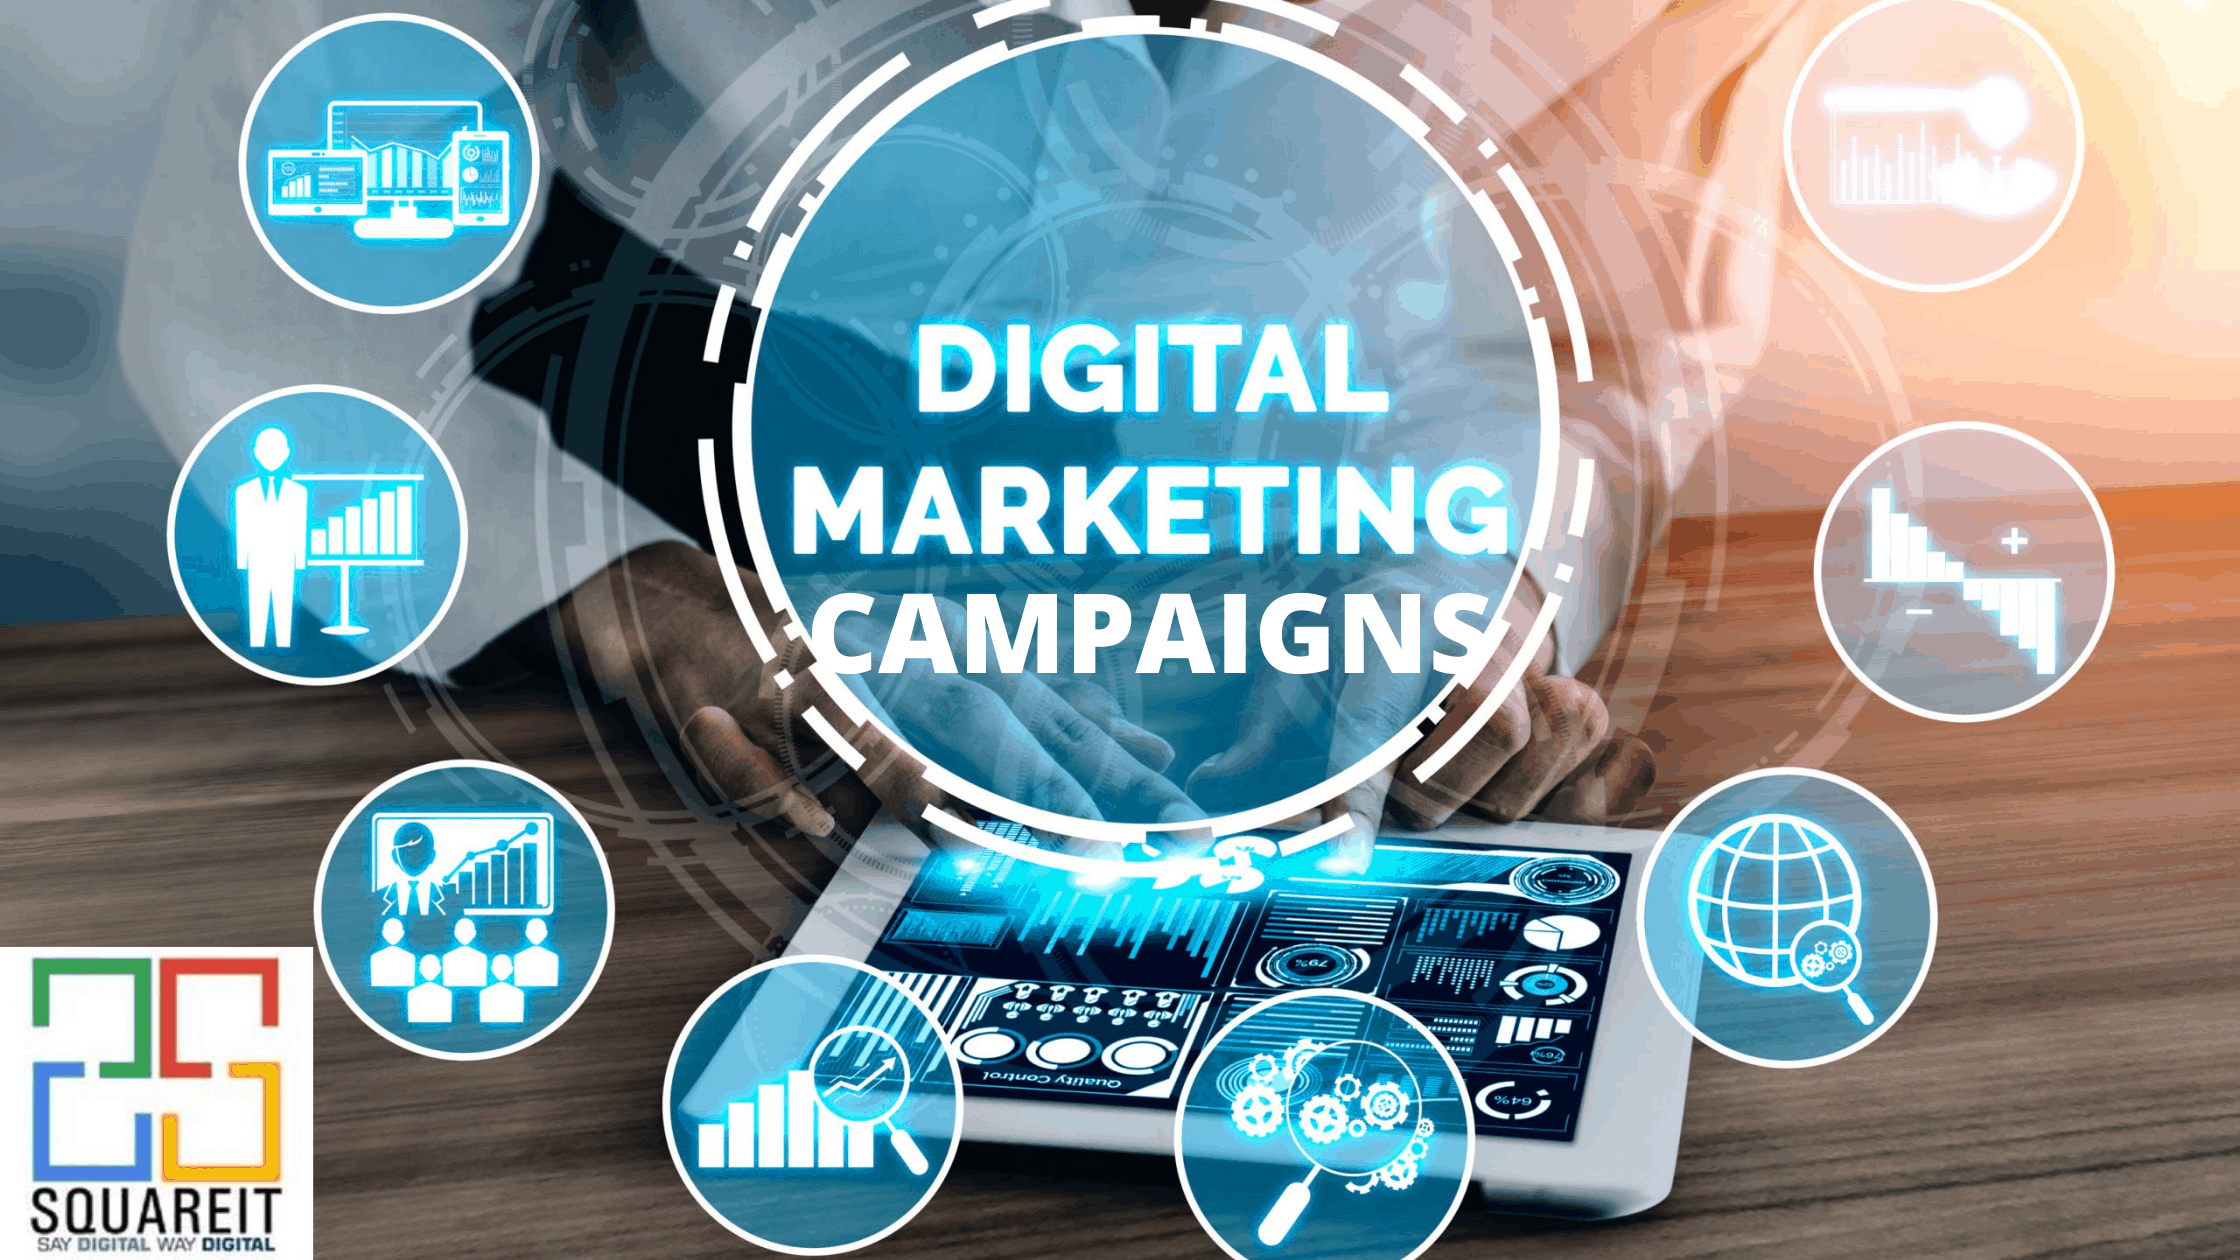  Digital Marketing Campaigns